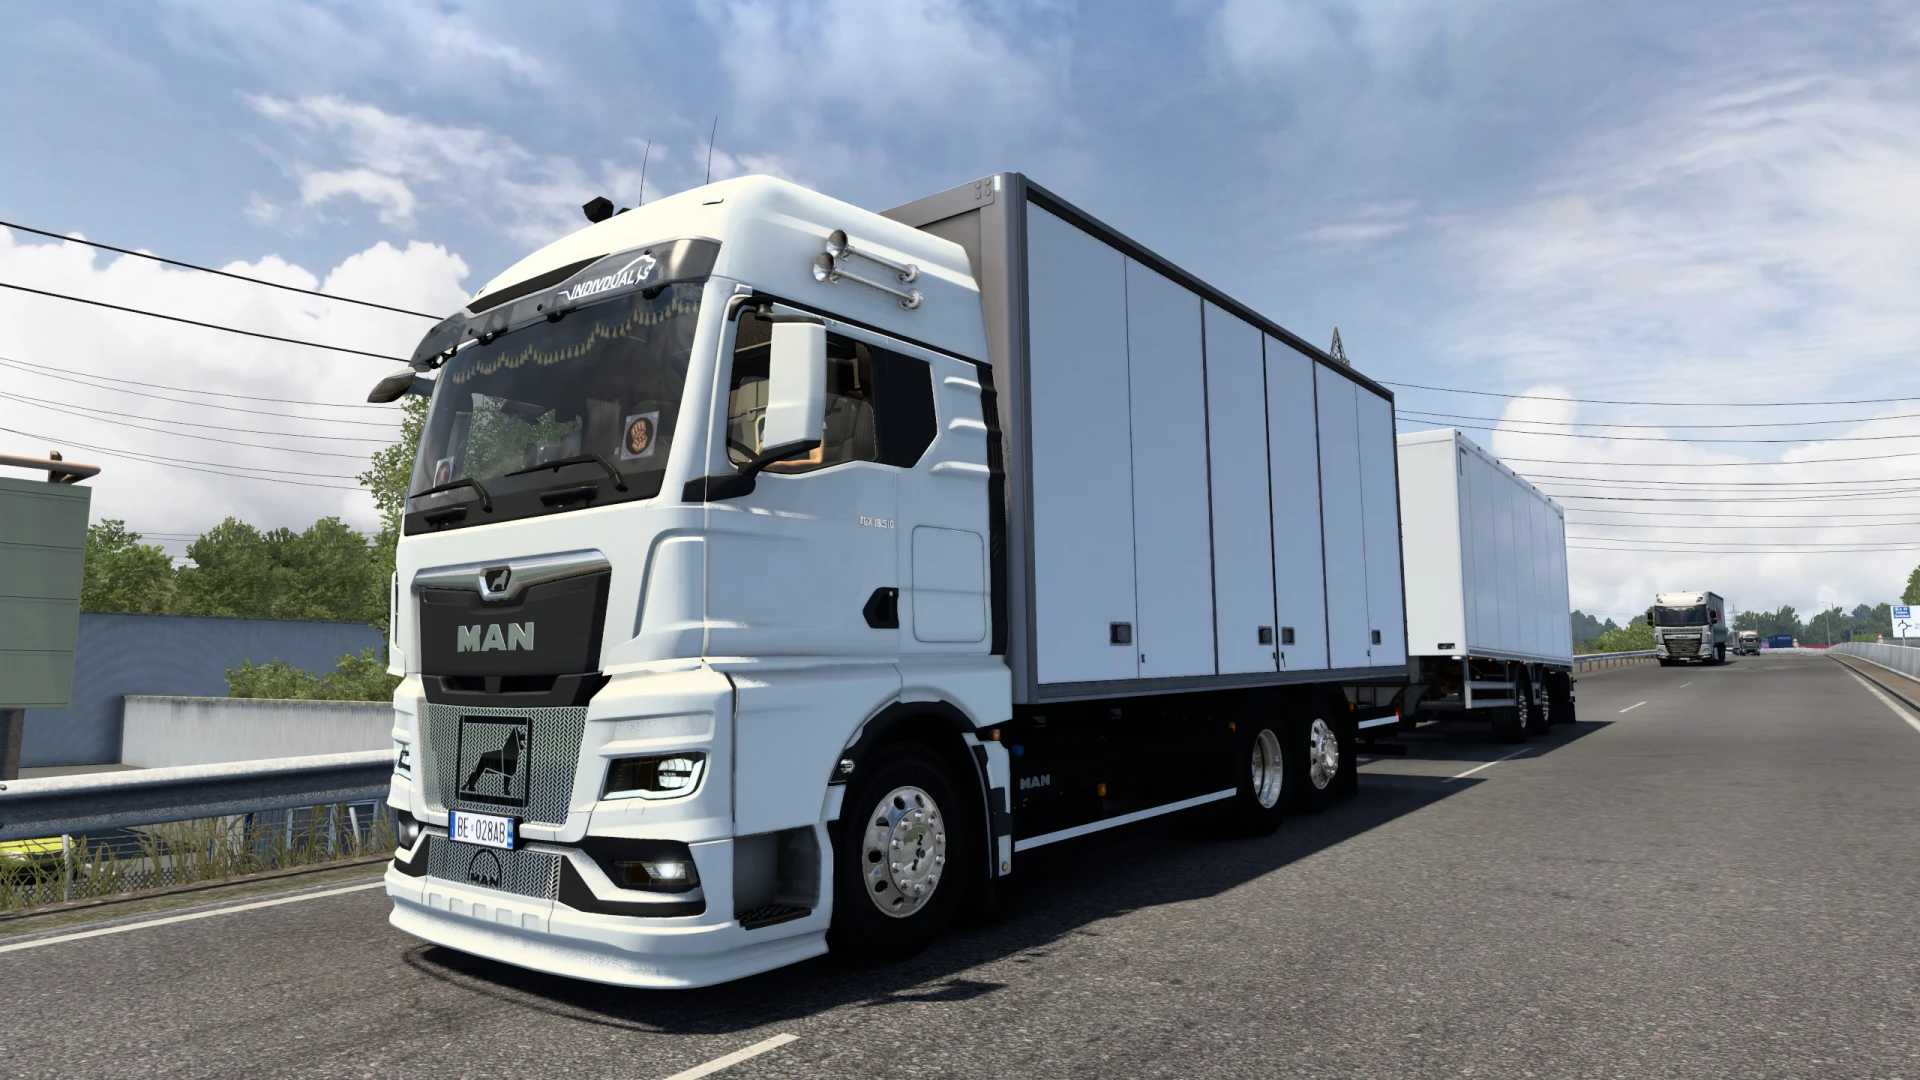 Man Tgx 2020 V60 By Hbb Store Last Version Ets2 Euro Truck Simulator 2 Mods American Truck 3711